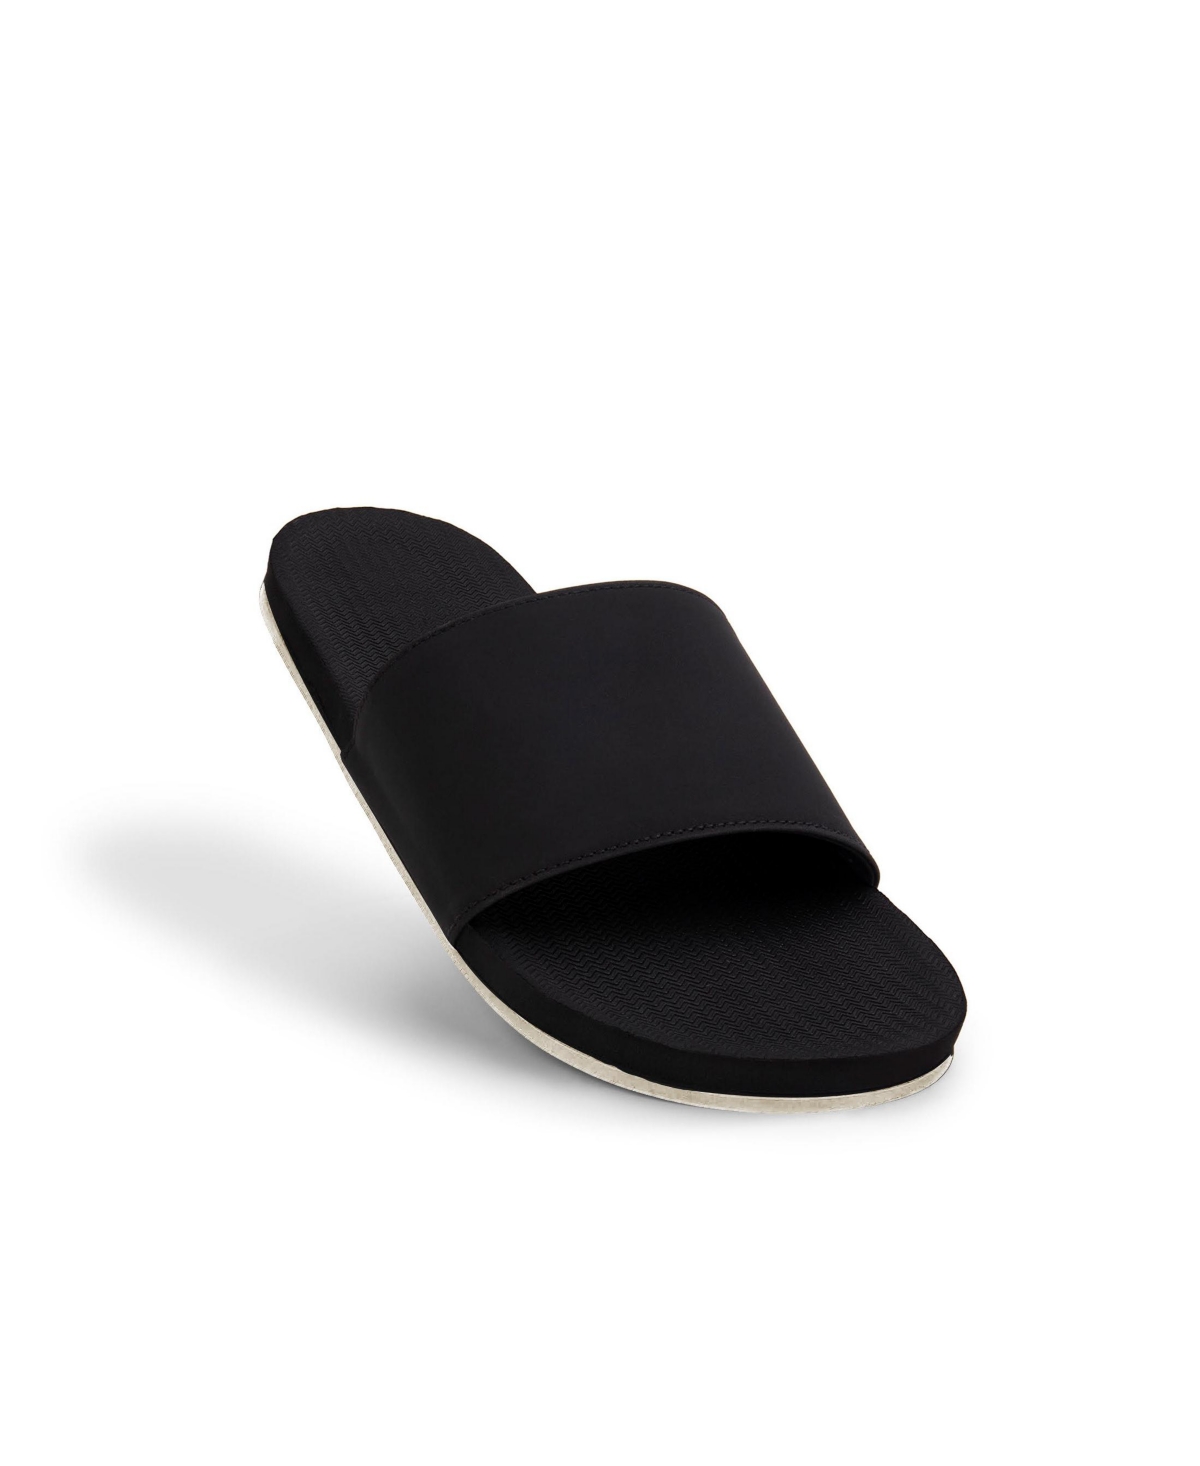 Men's Slide Sneaker Sole - Sole indigo/shore